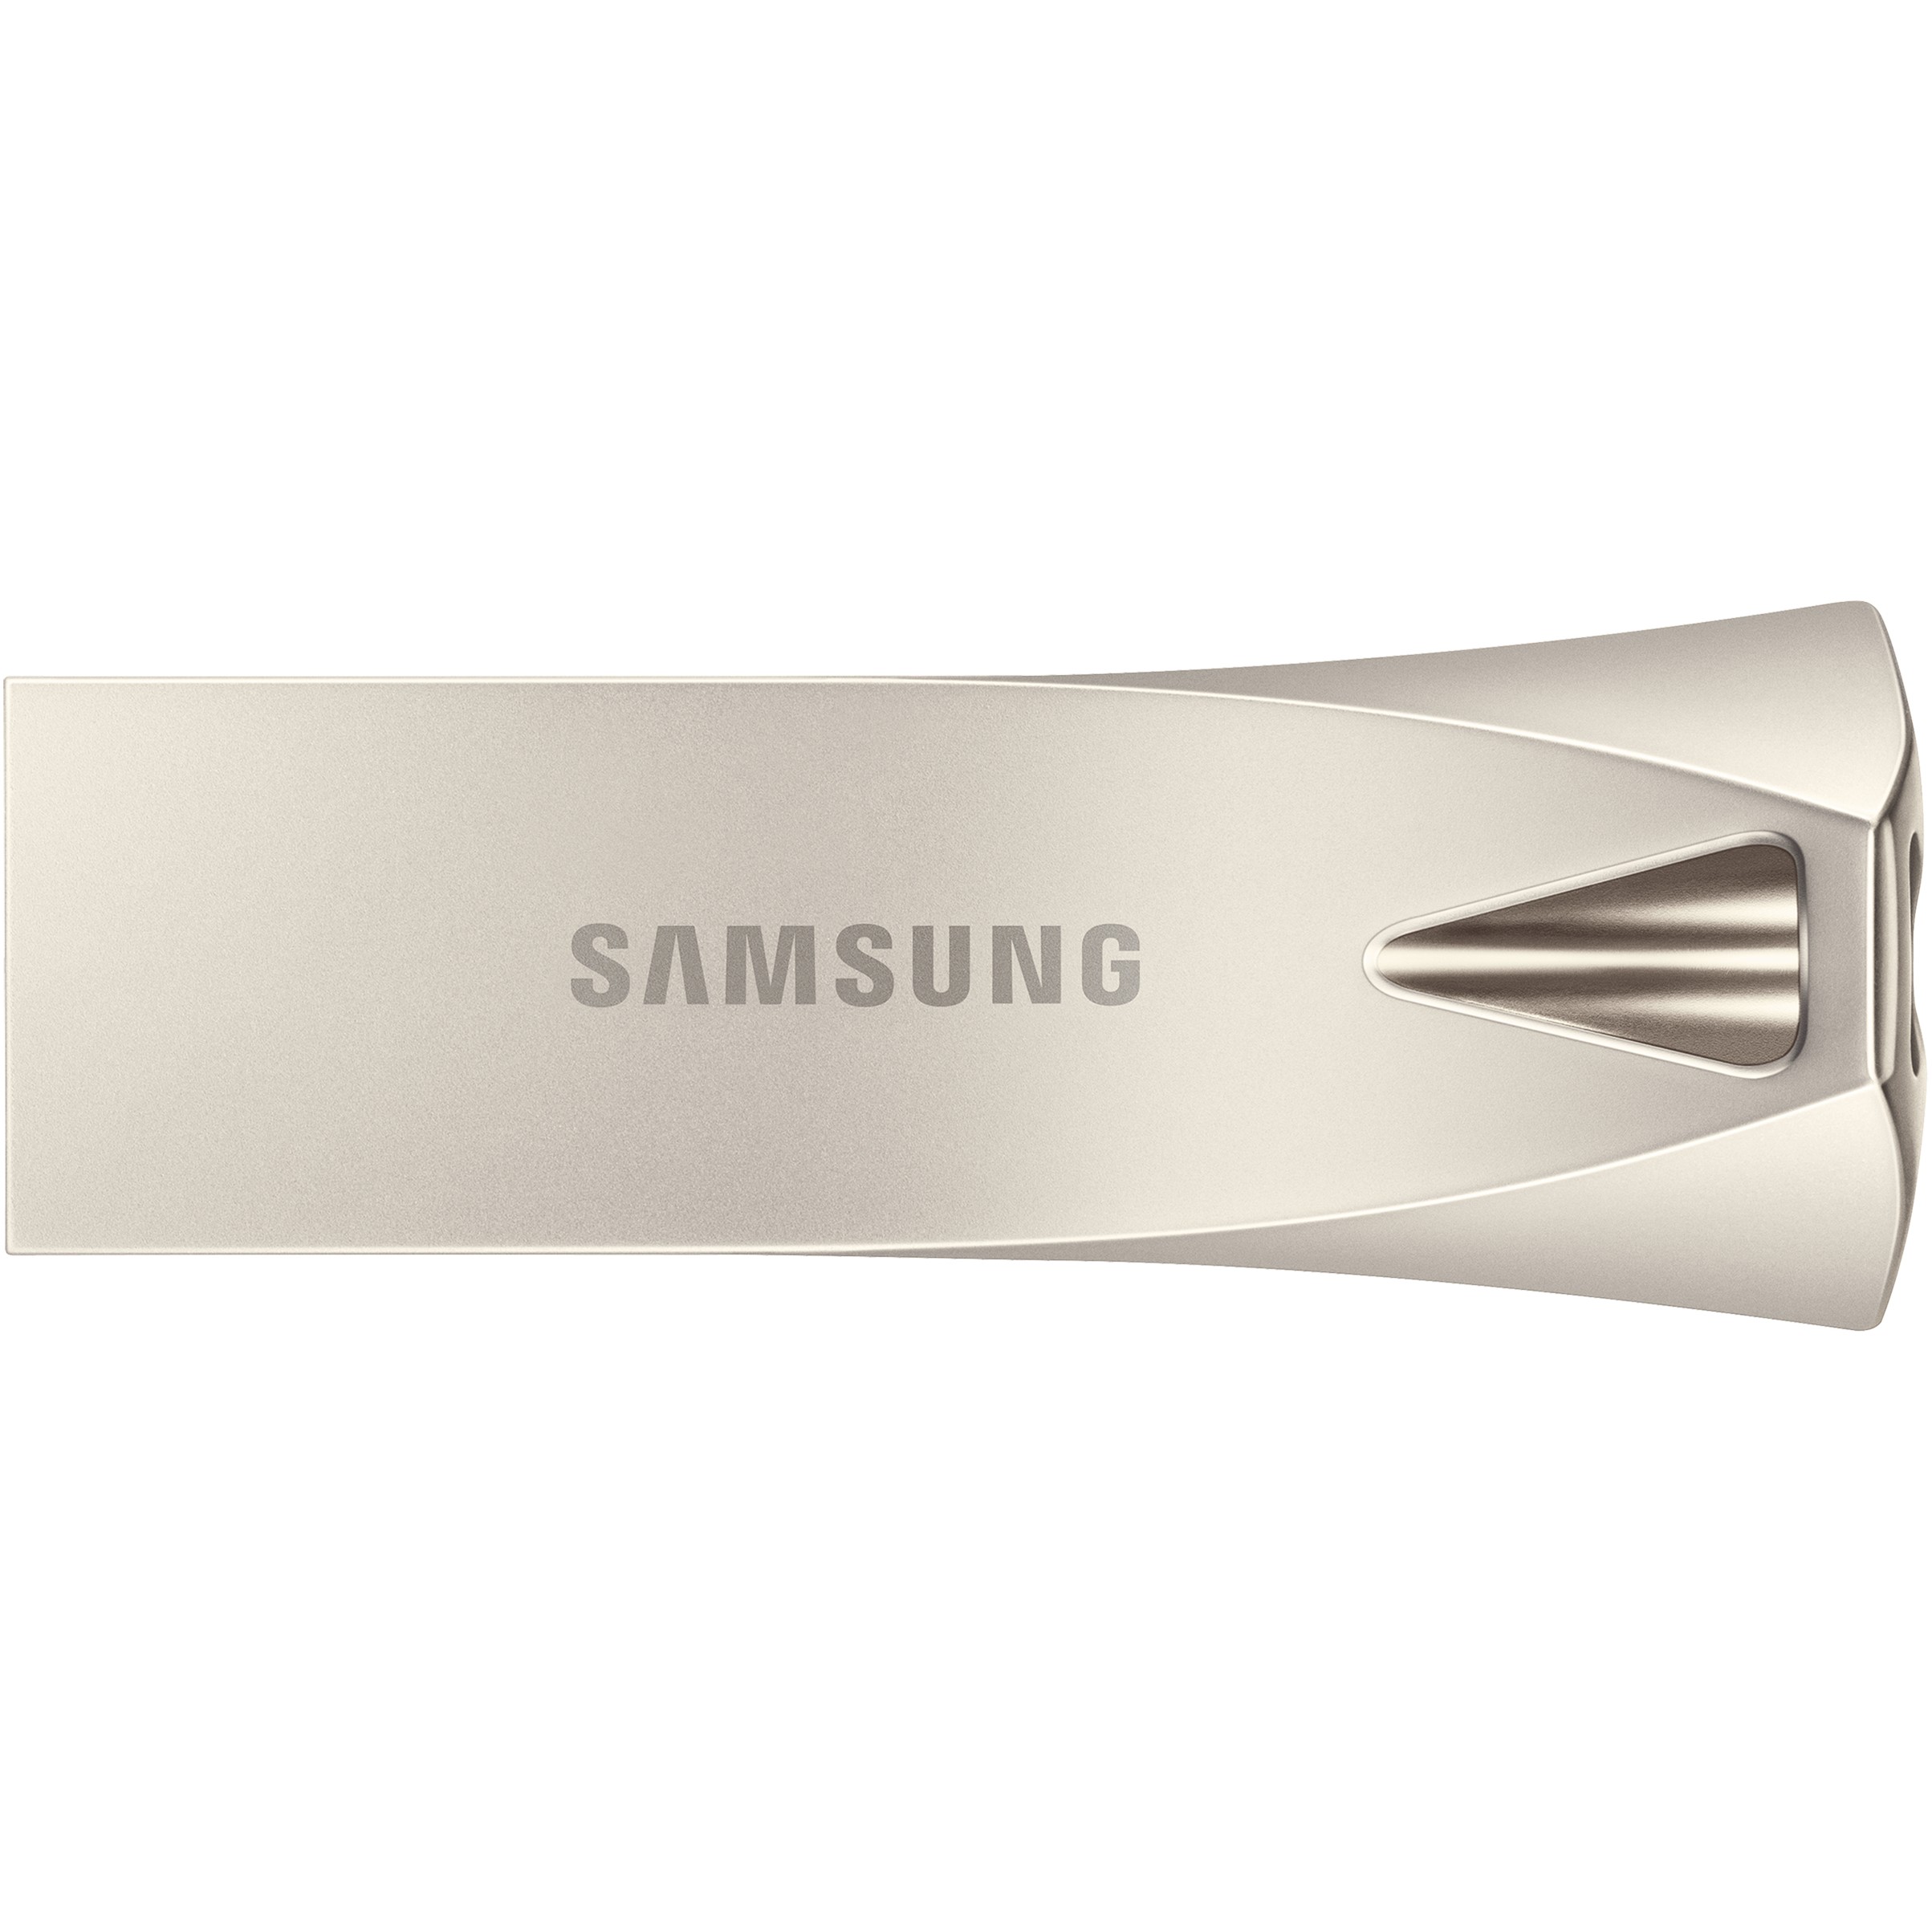 SAMSUNG MUF-128BE3/APC, USB-Stick, Samsung MUF-128BE USB  (BILD1)